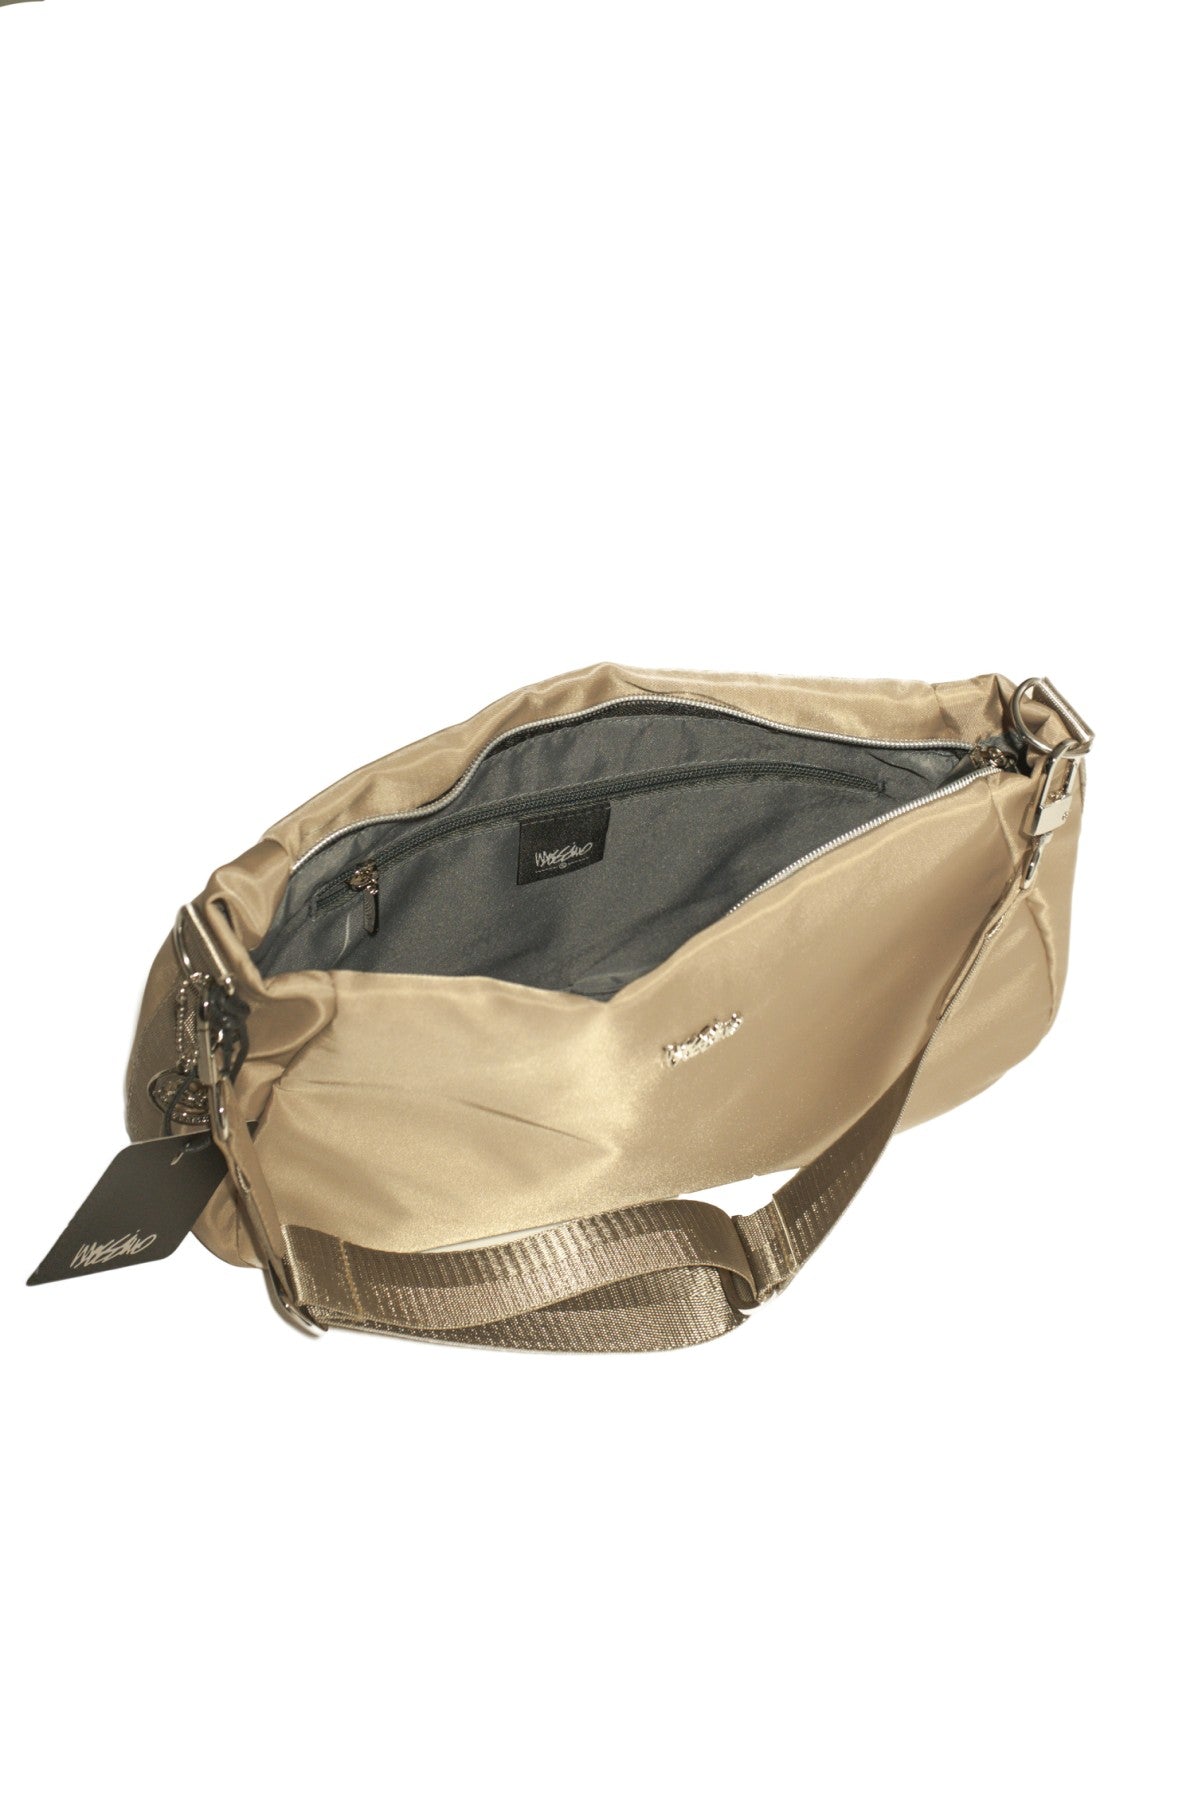 Mossimo X Large Shoulder Bag/Weekender Bag - clothing & accessories - by  owner - apparel sale - craigslist